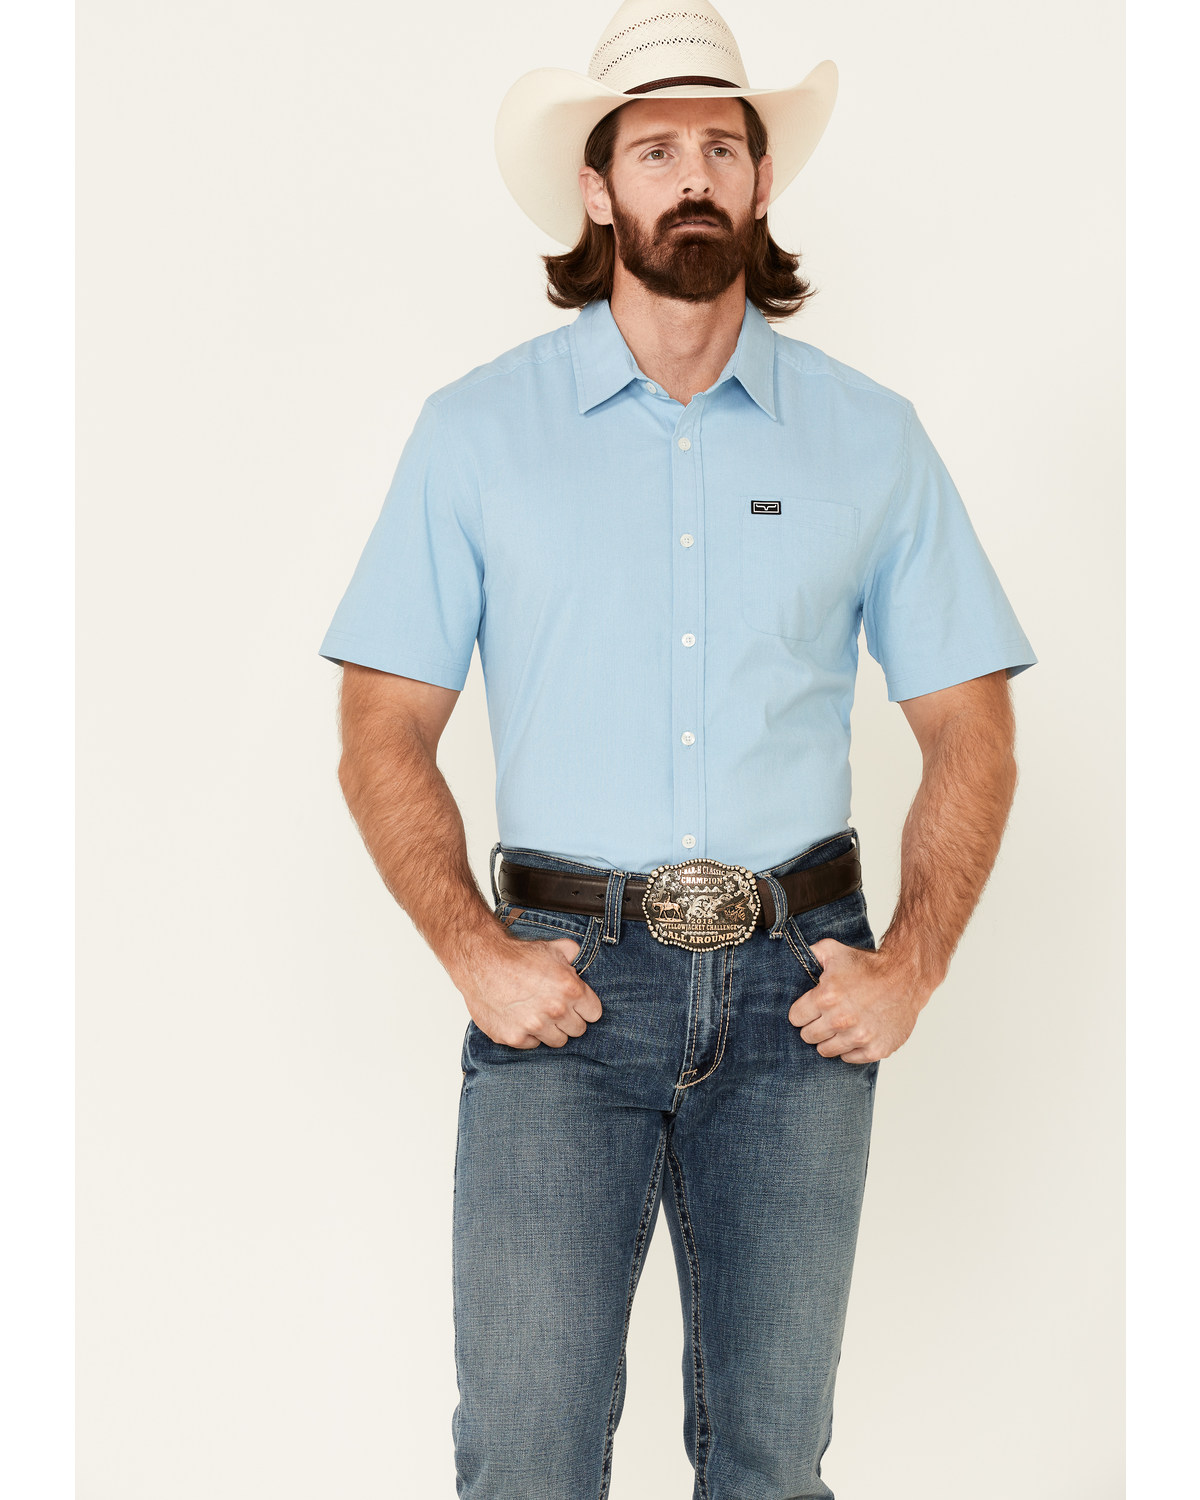 Kimes Ranch Men's Linville Coolmax Short Sleeve Button Down Western Shirt